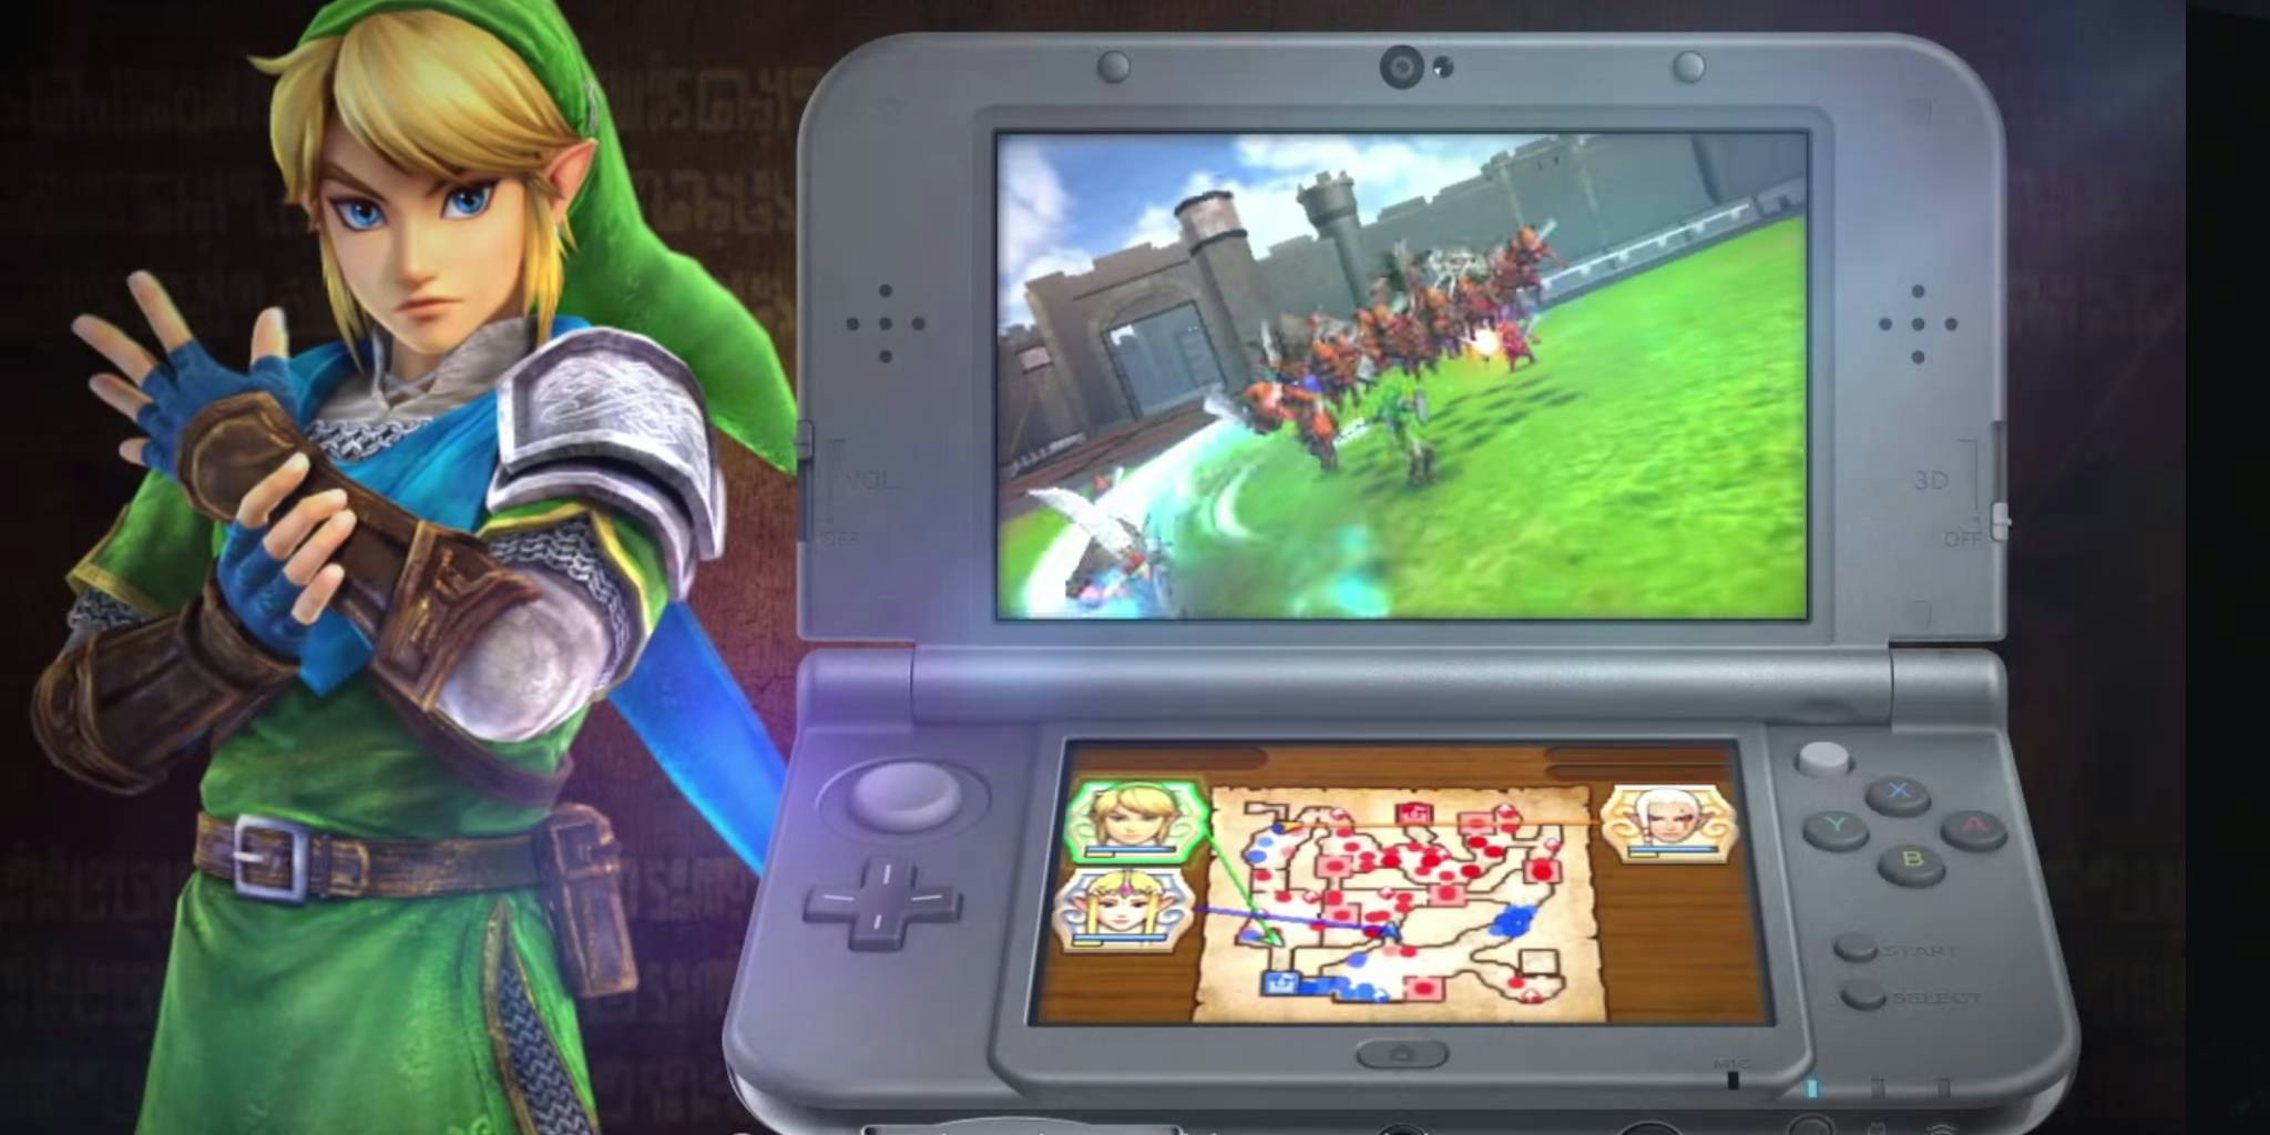 Nintendo Confirms Hyrule Warriors Legends For The Nintendo 3DS Due